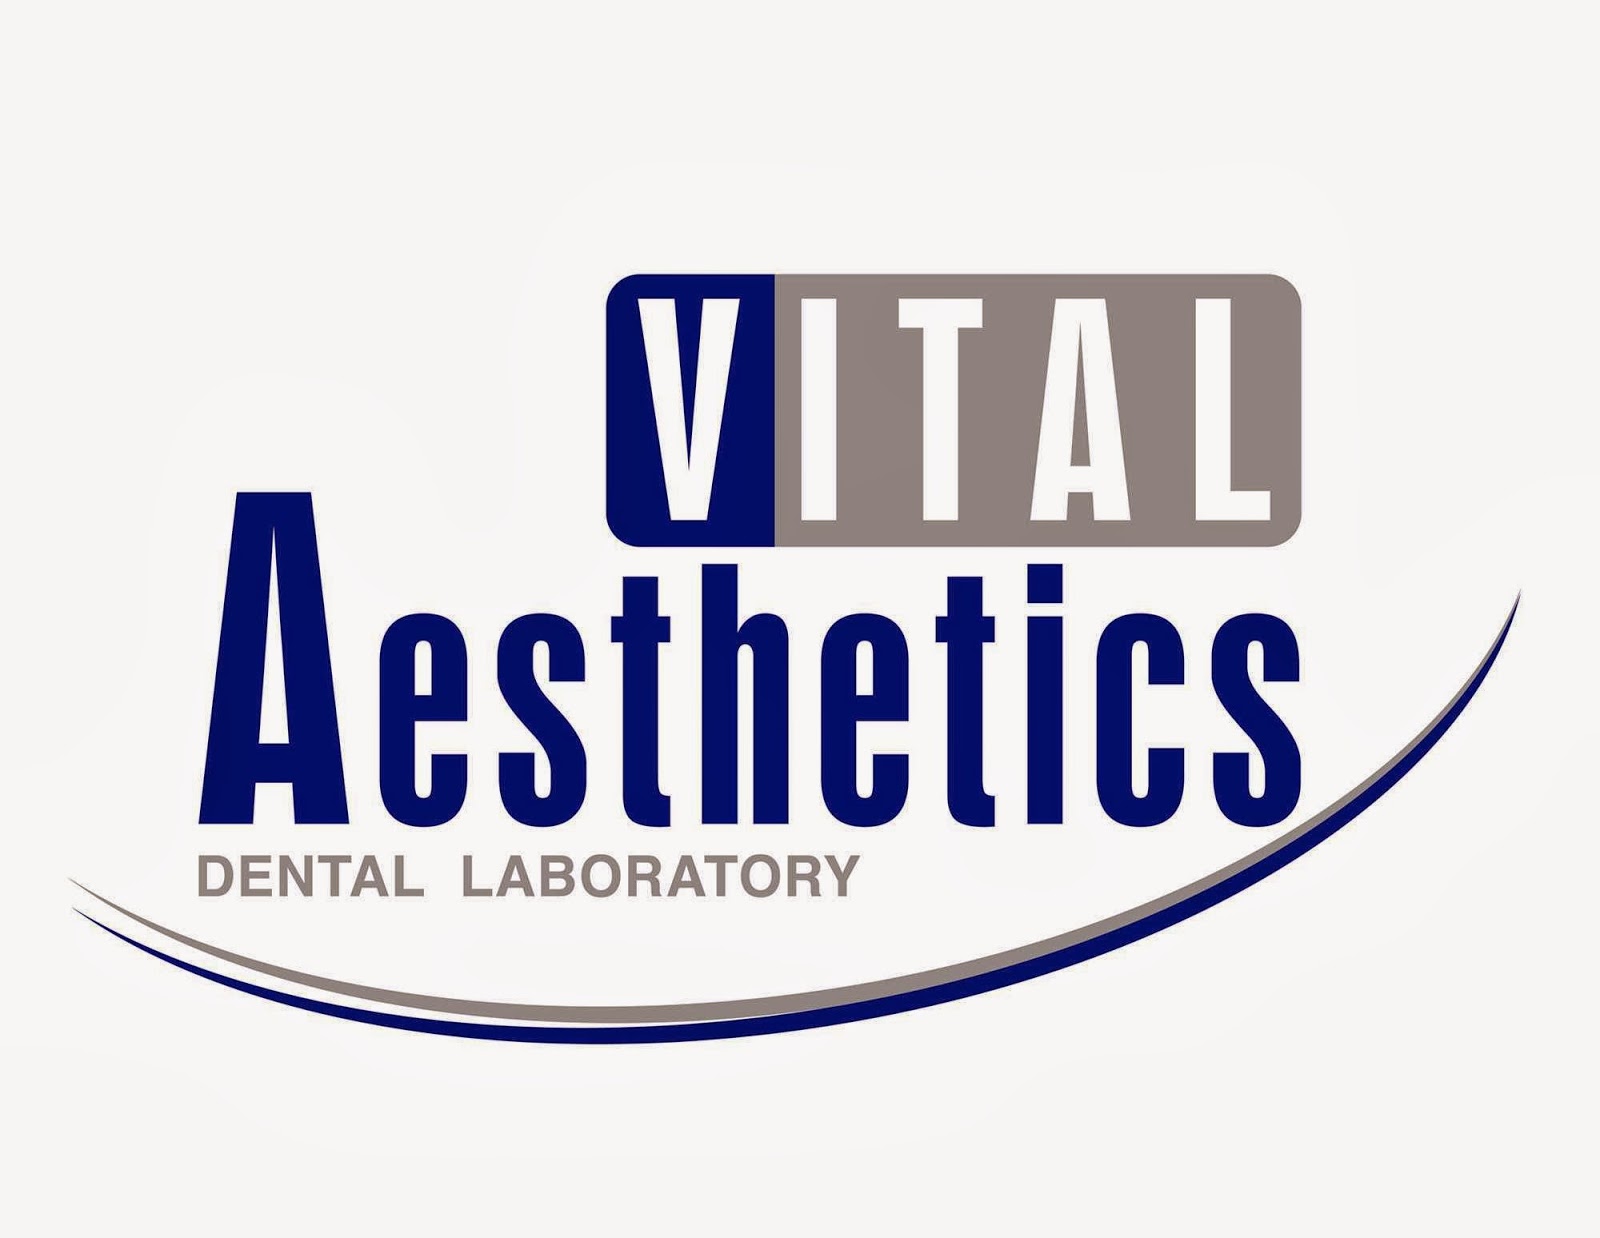 Photo of Vital Aesthetics Dental Lab in New York City, New York, United States - 1 Picture of Point of interest, Establishment, Health, Dentist